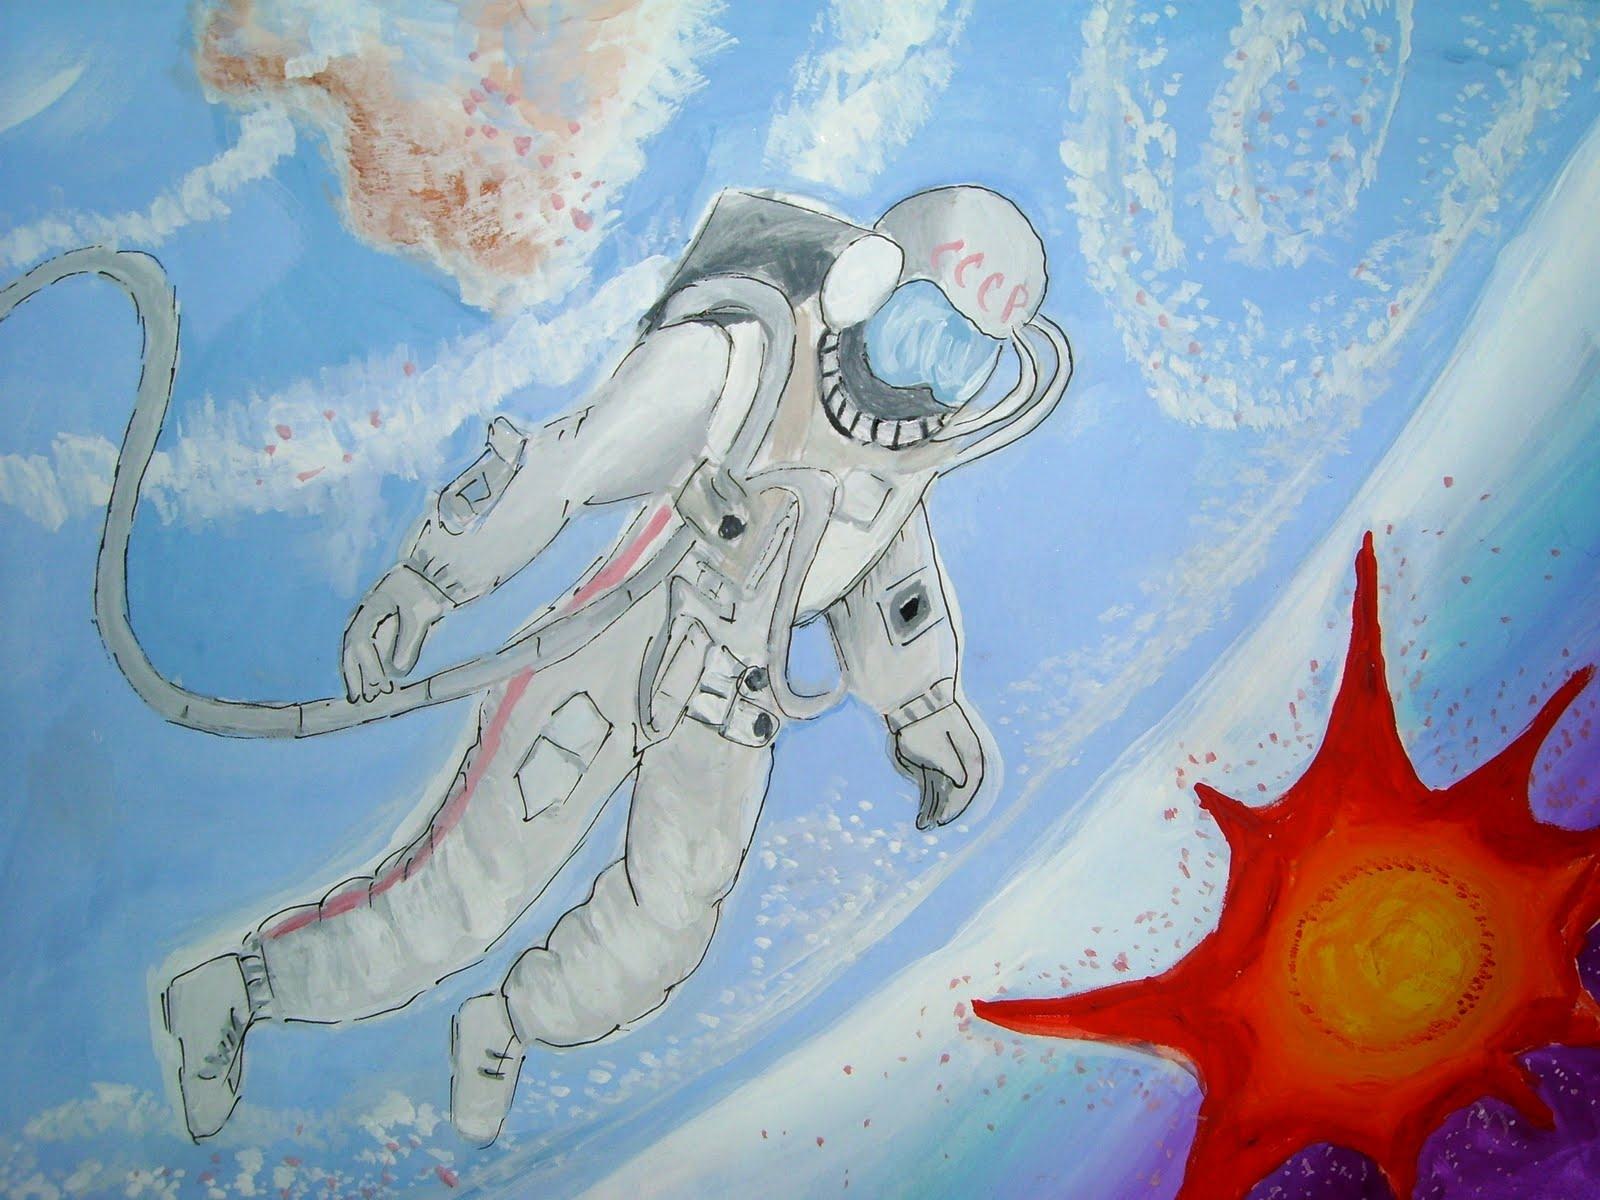 Рисунок на тему космонавт. Рисунок на космическую тему. Рисунок на тему космонавтики. Рисунок ко Дню космонавтики. Рисунок на космическую тему 4 класс.